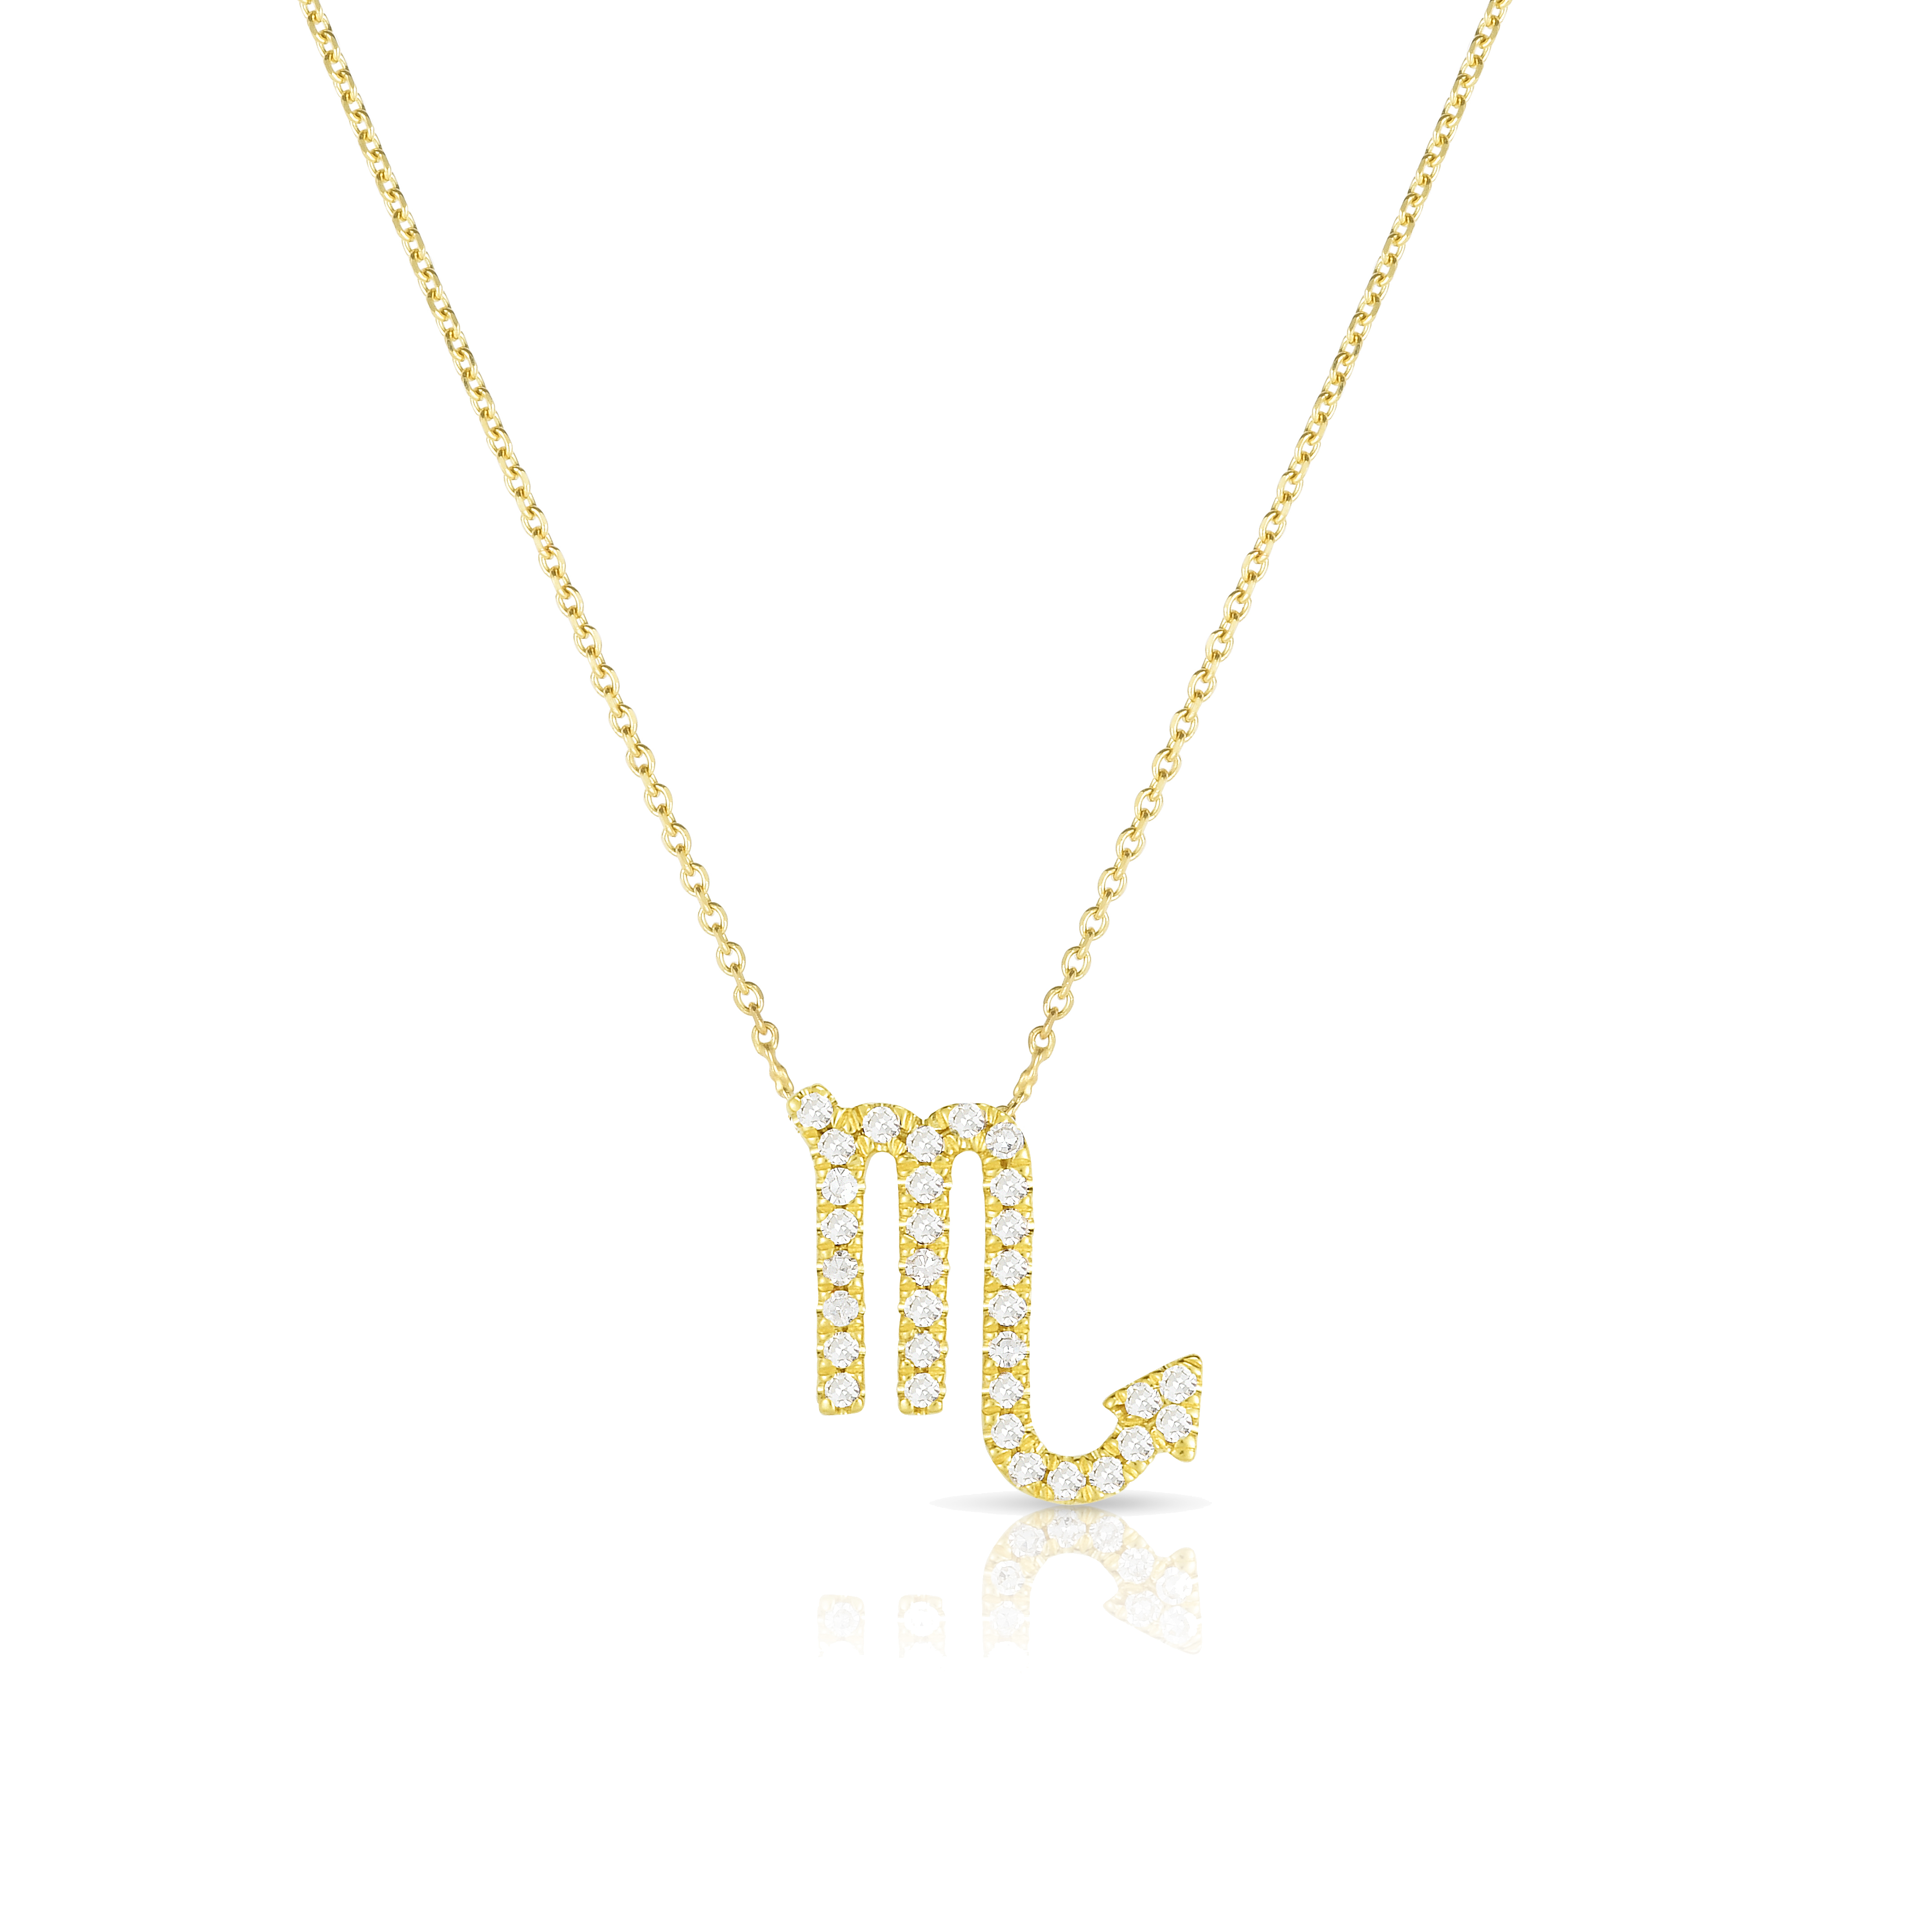 Scorpio Necklace - 14k gold and diamonds